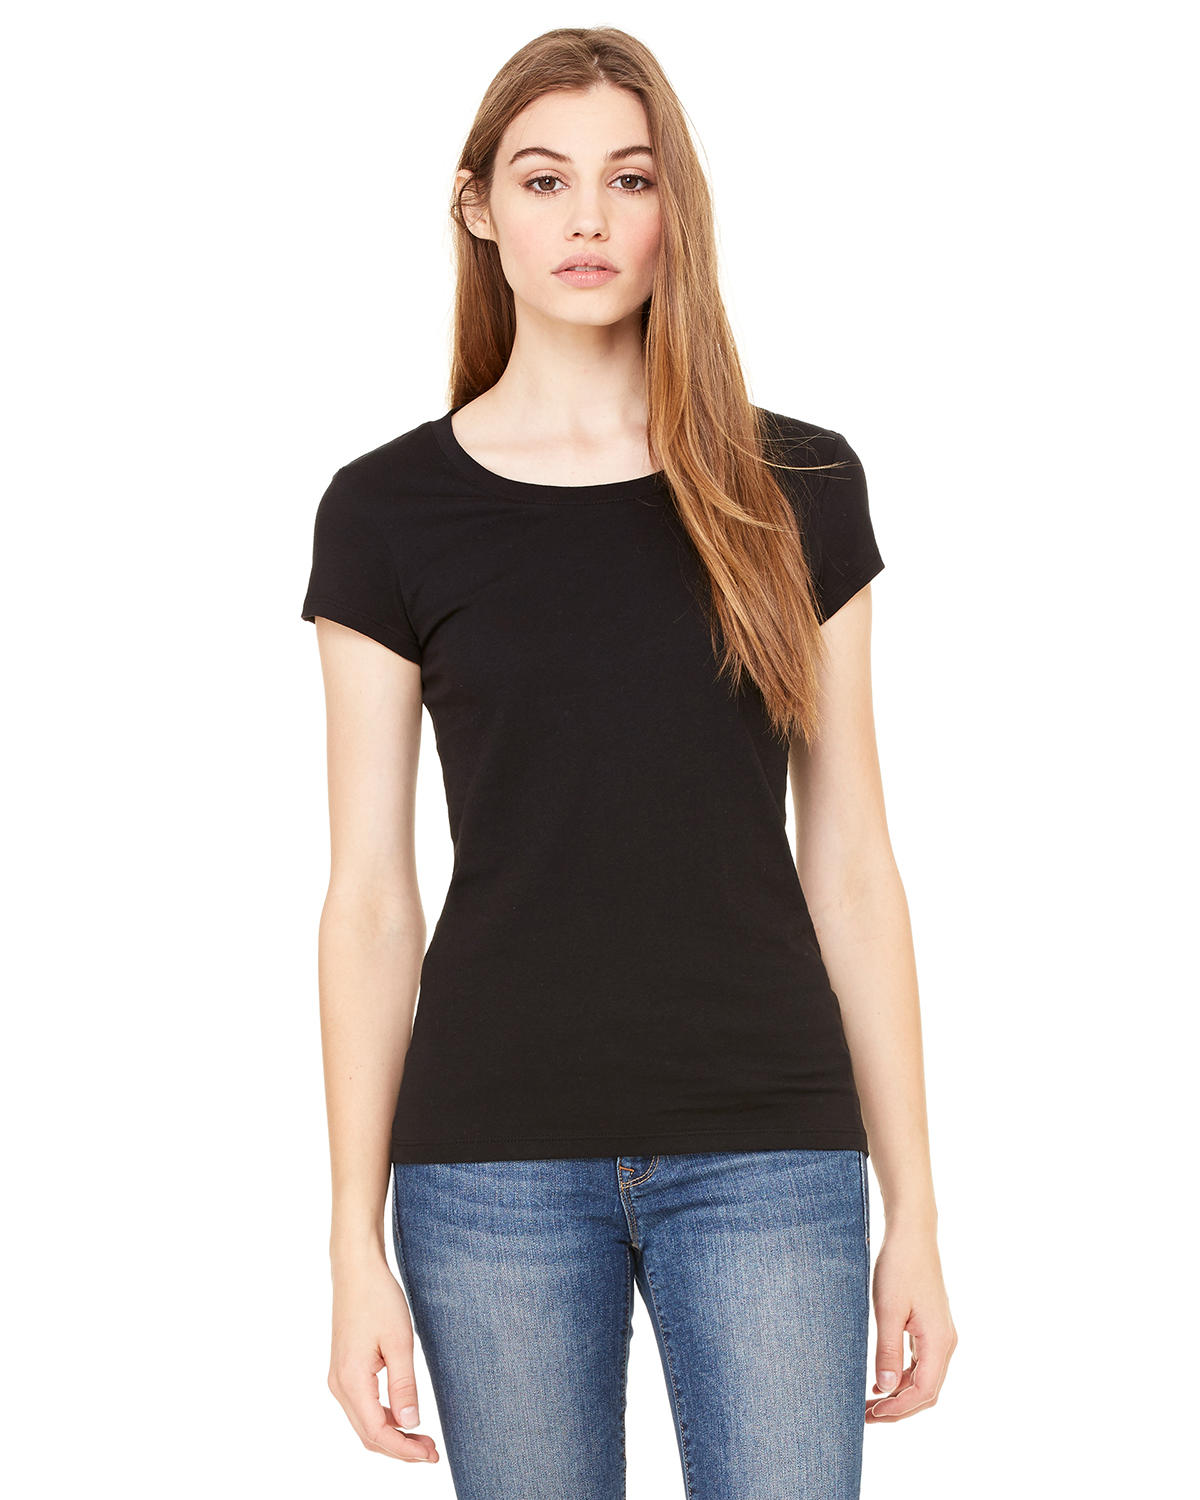 bella 8101 Ladies' Marcelle Sheer Jersey Longer Length T-Shirt